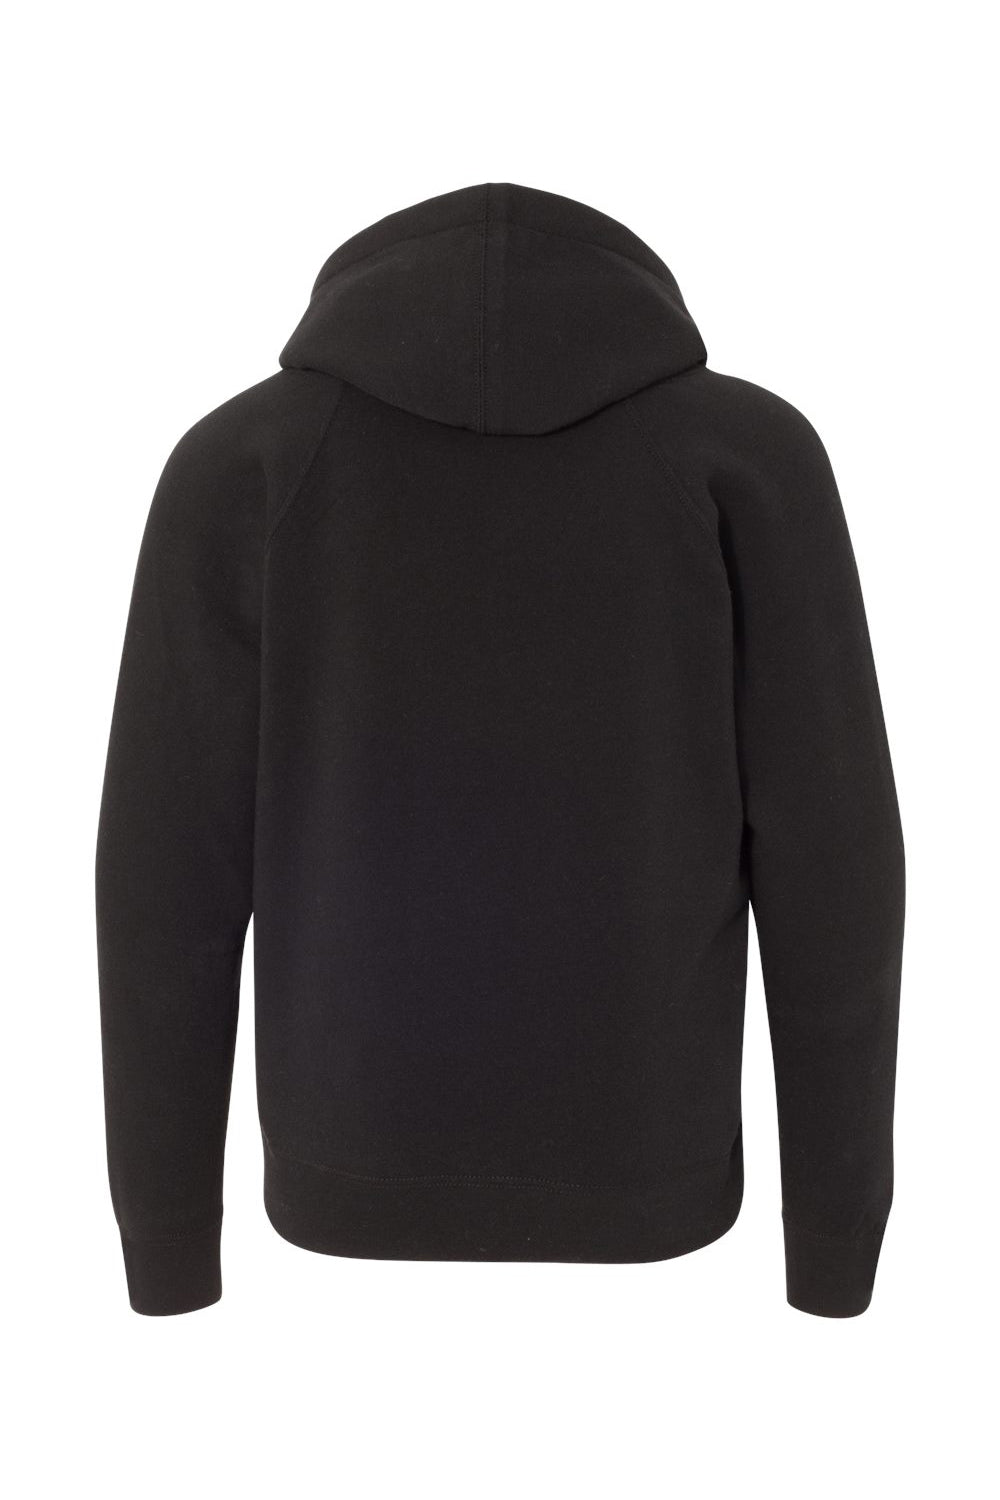 Independent Trading Co. PRM15YSB Youth Special Blend Raglan Hooded Sweatshirt Hoodie Black Flat Back